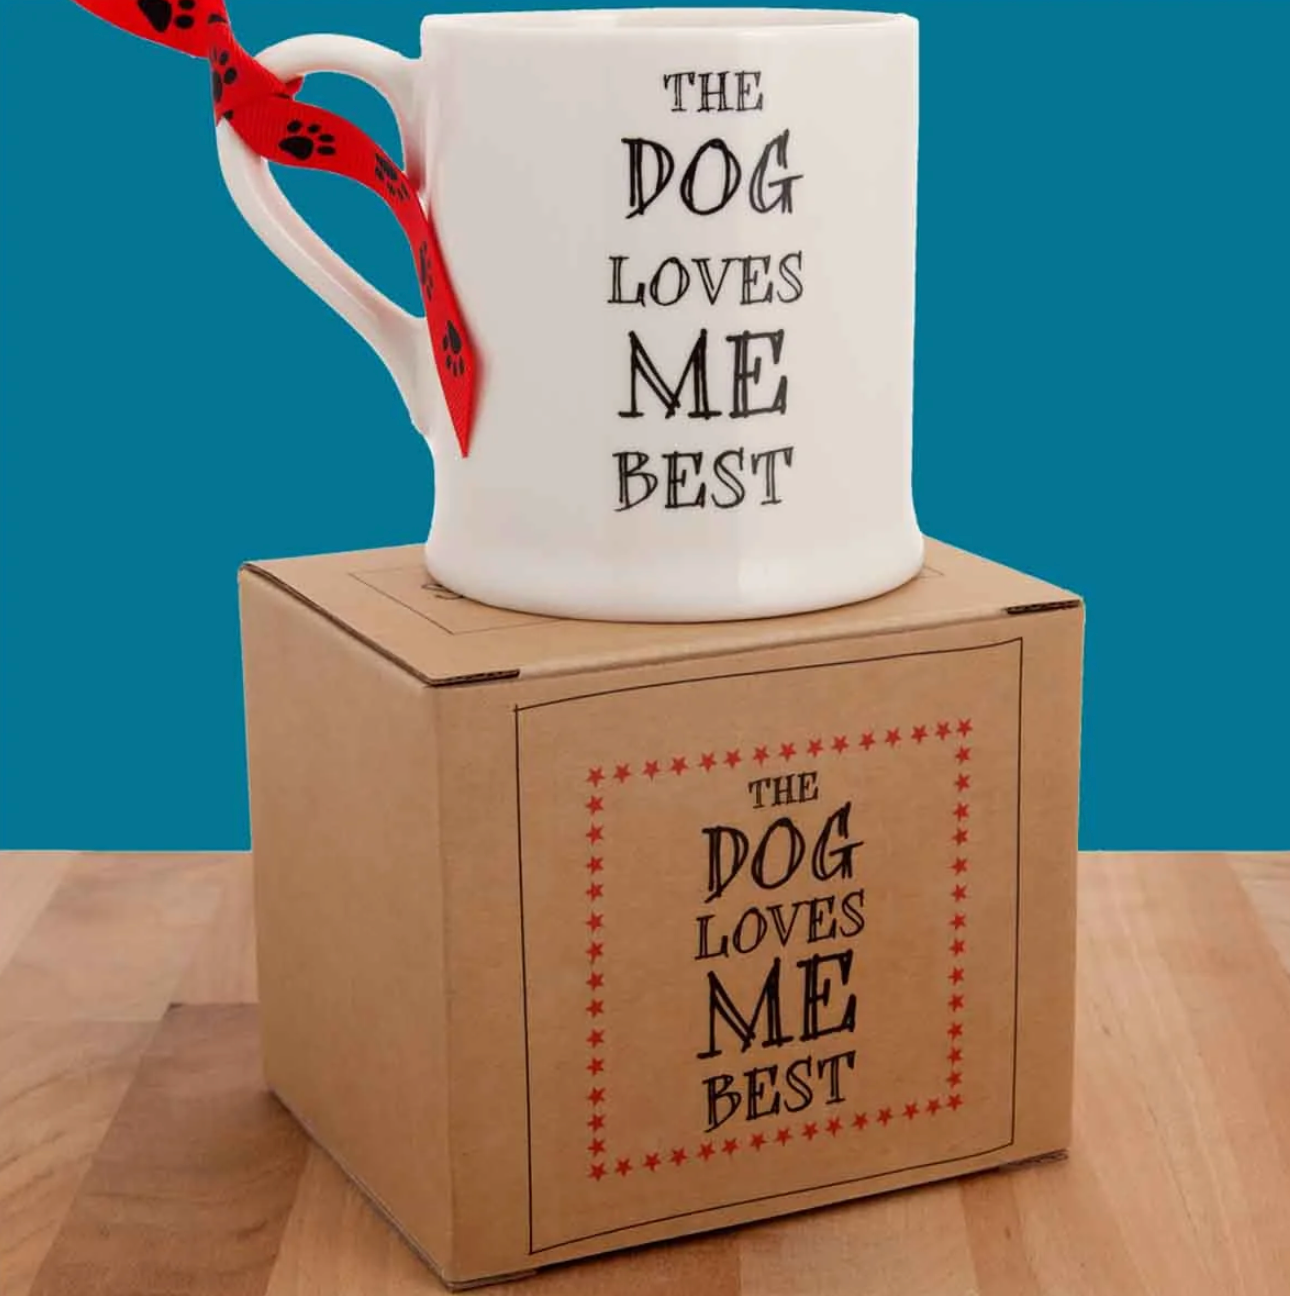 Sweet William Ceramic Mug, The Dog Loves Me Best